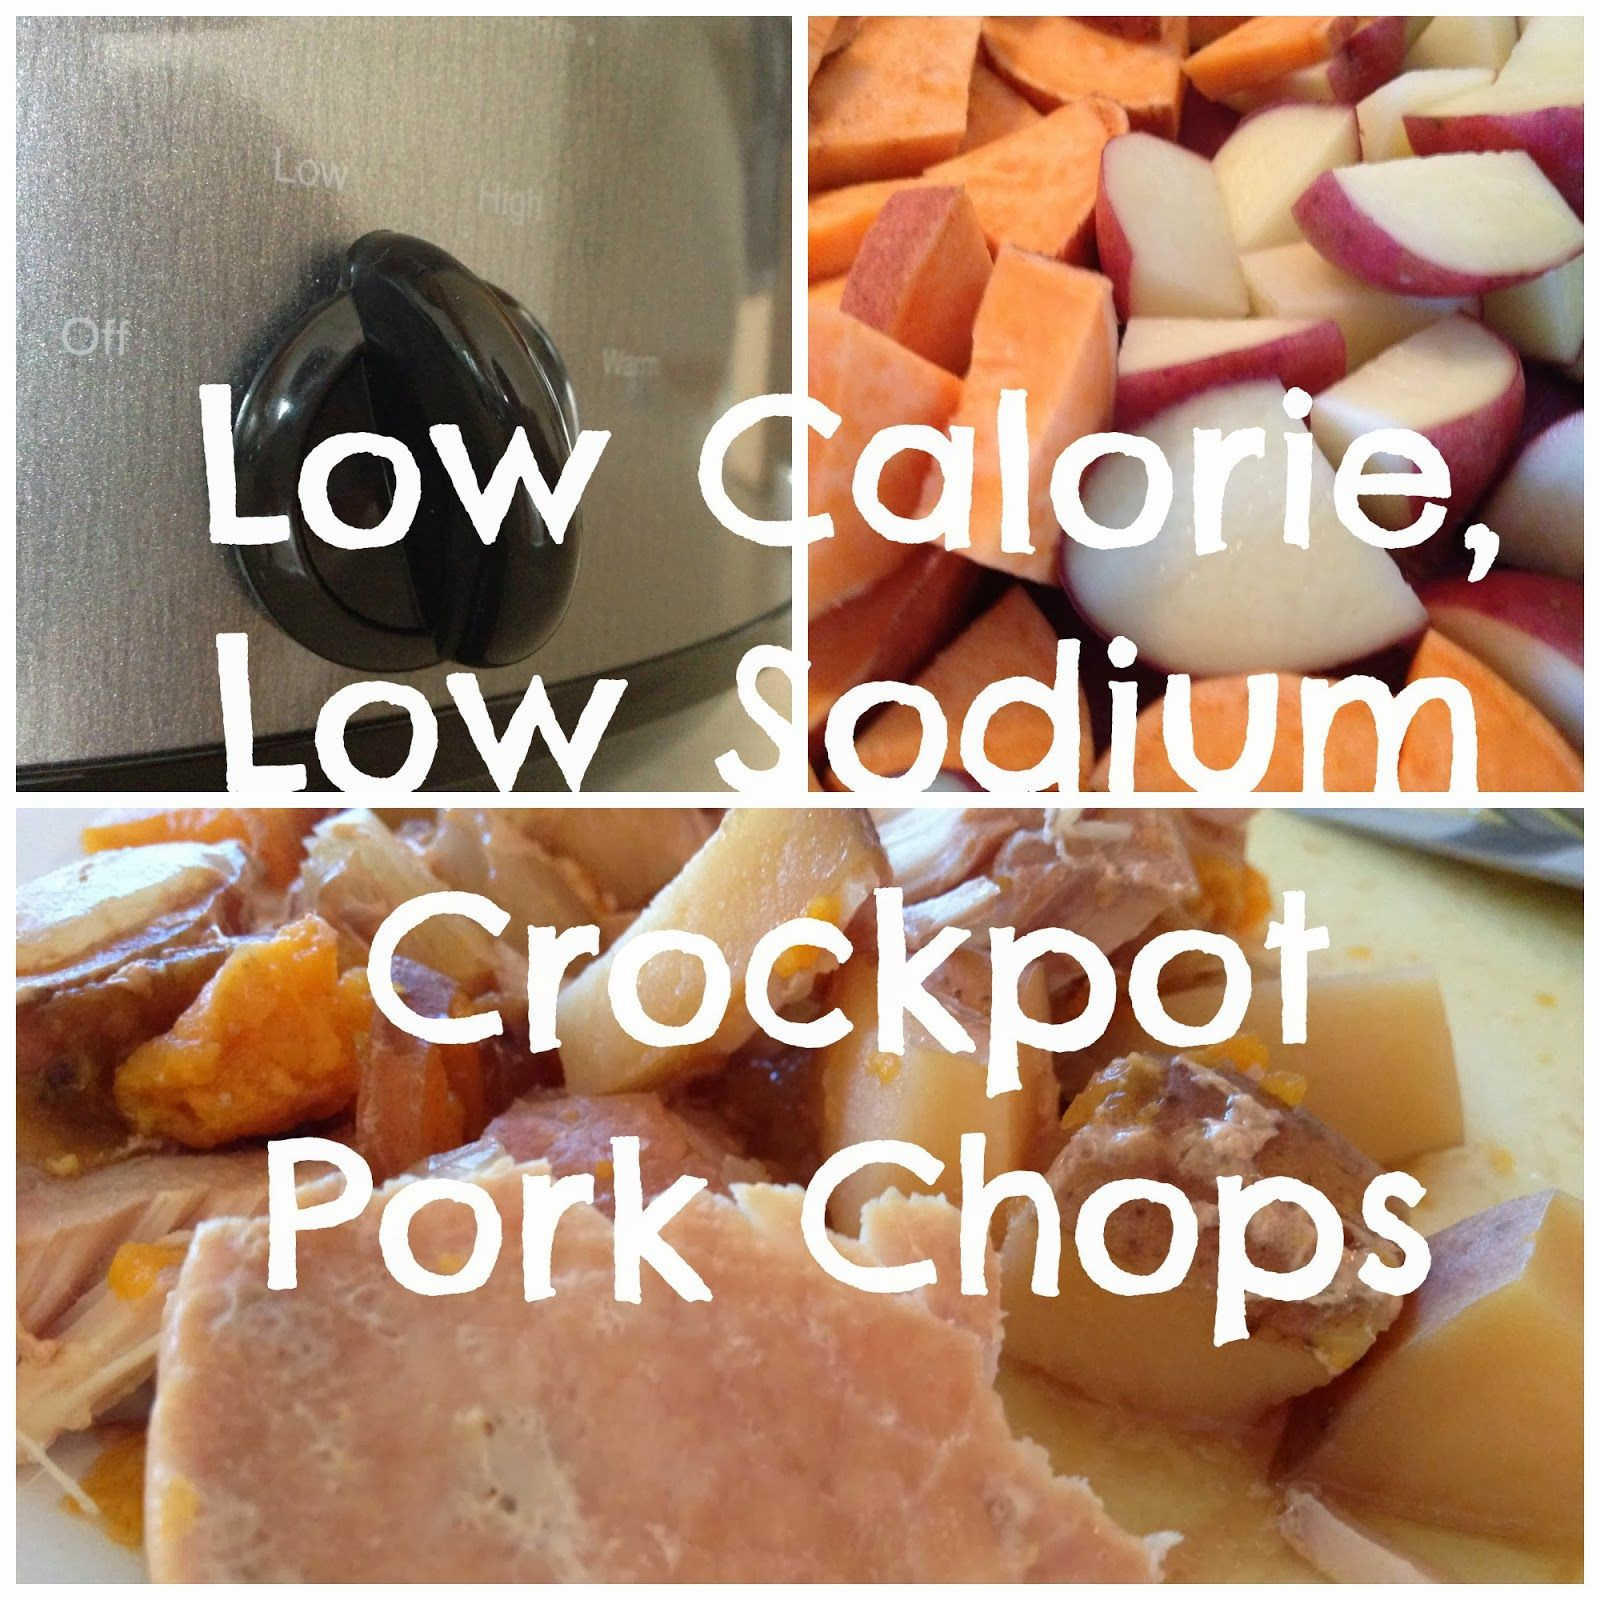 Low Sodium Low Calorie Recipes
 The Simple Life Low Calorie Crockpot Pork Chops Just 4